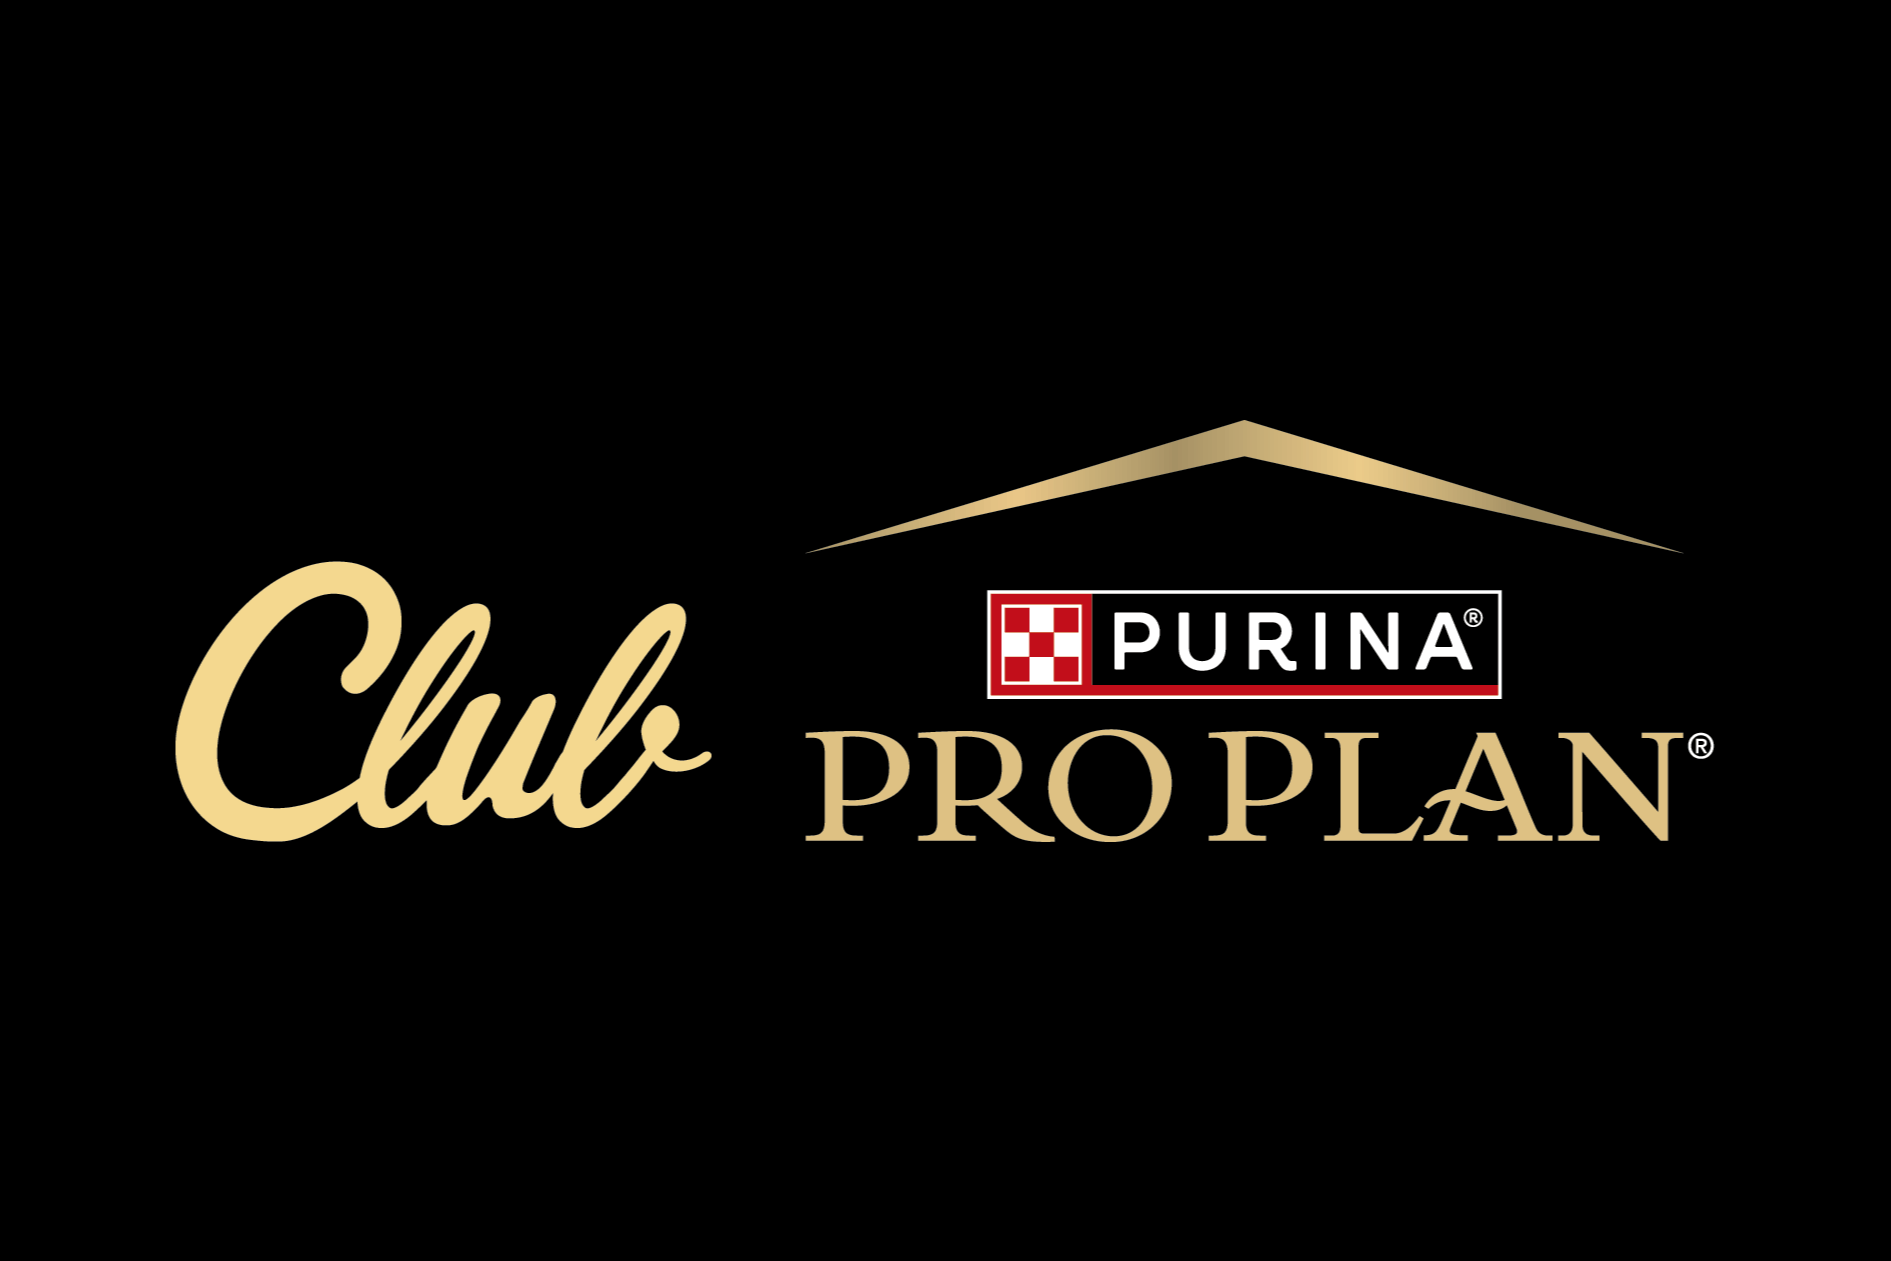 PRO PLAN Club